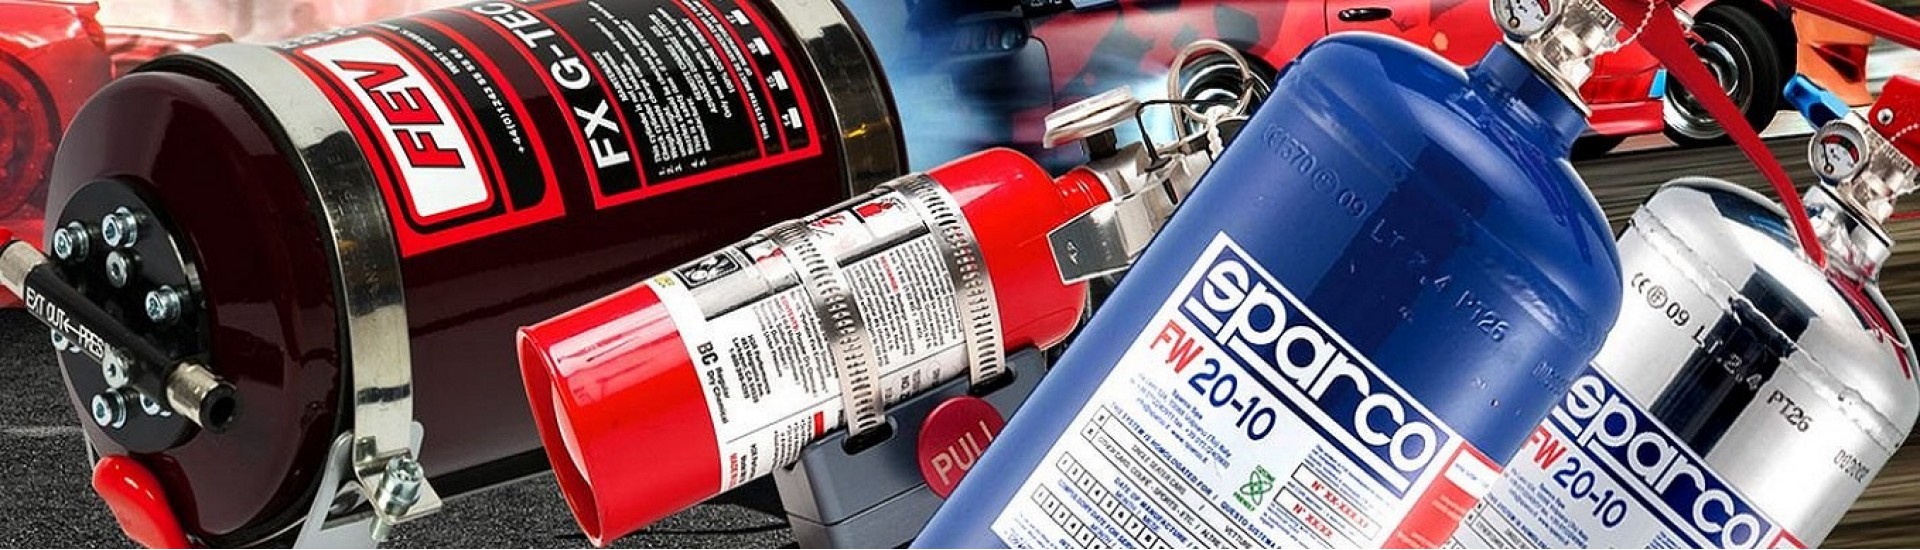 کپسول آتش نشانی خودرو هوندا سیویک 2009 